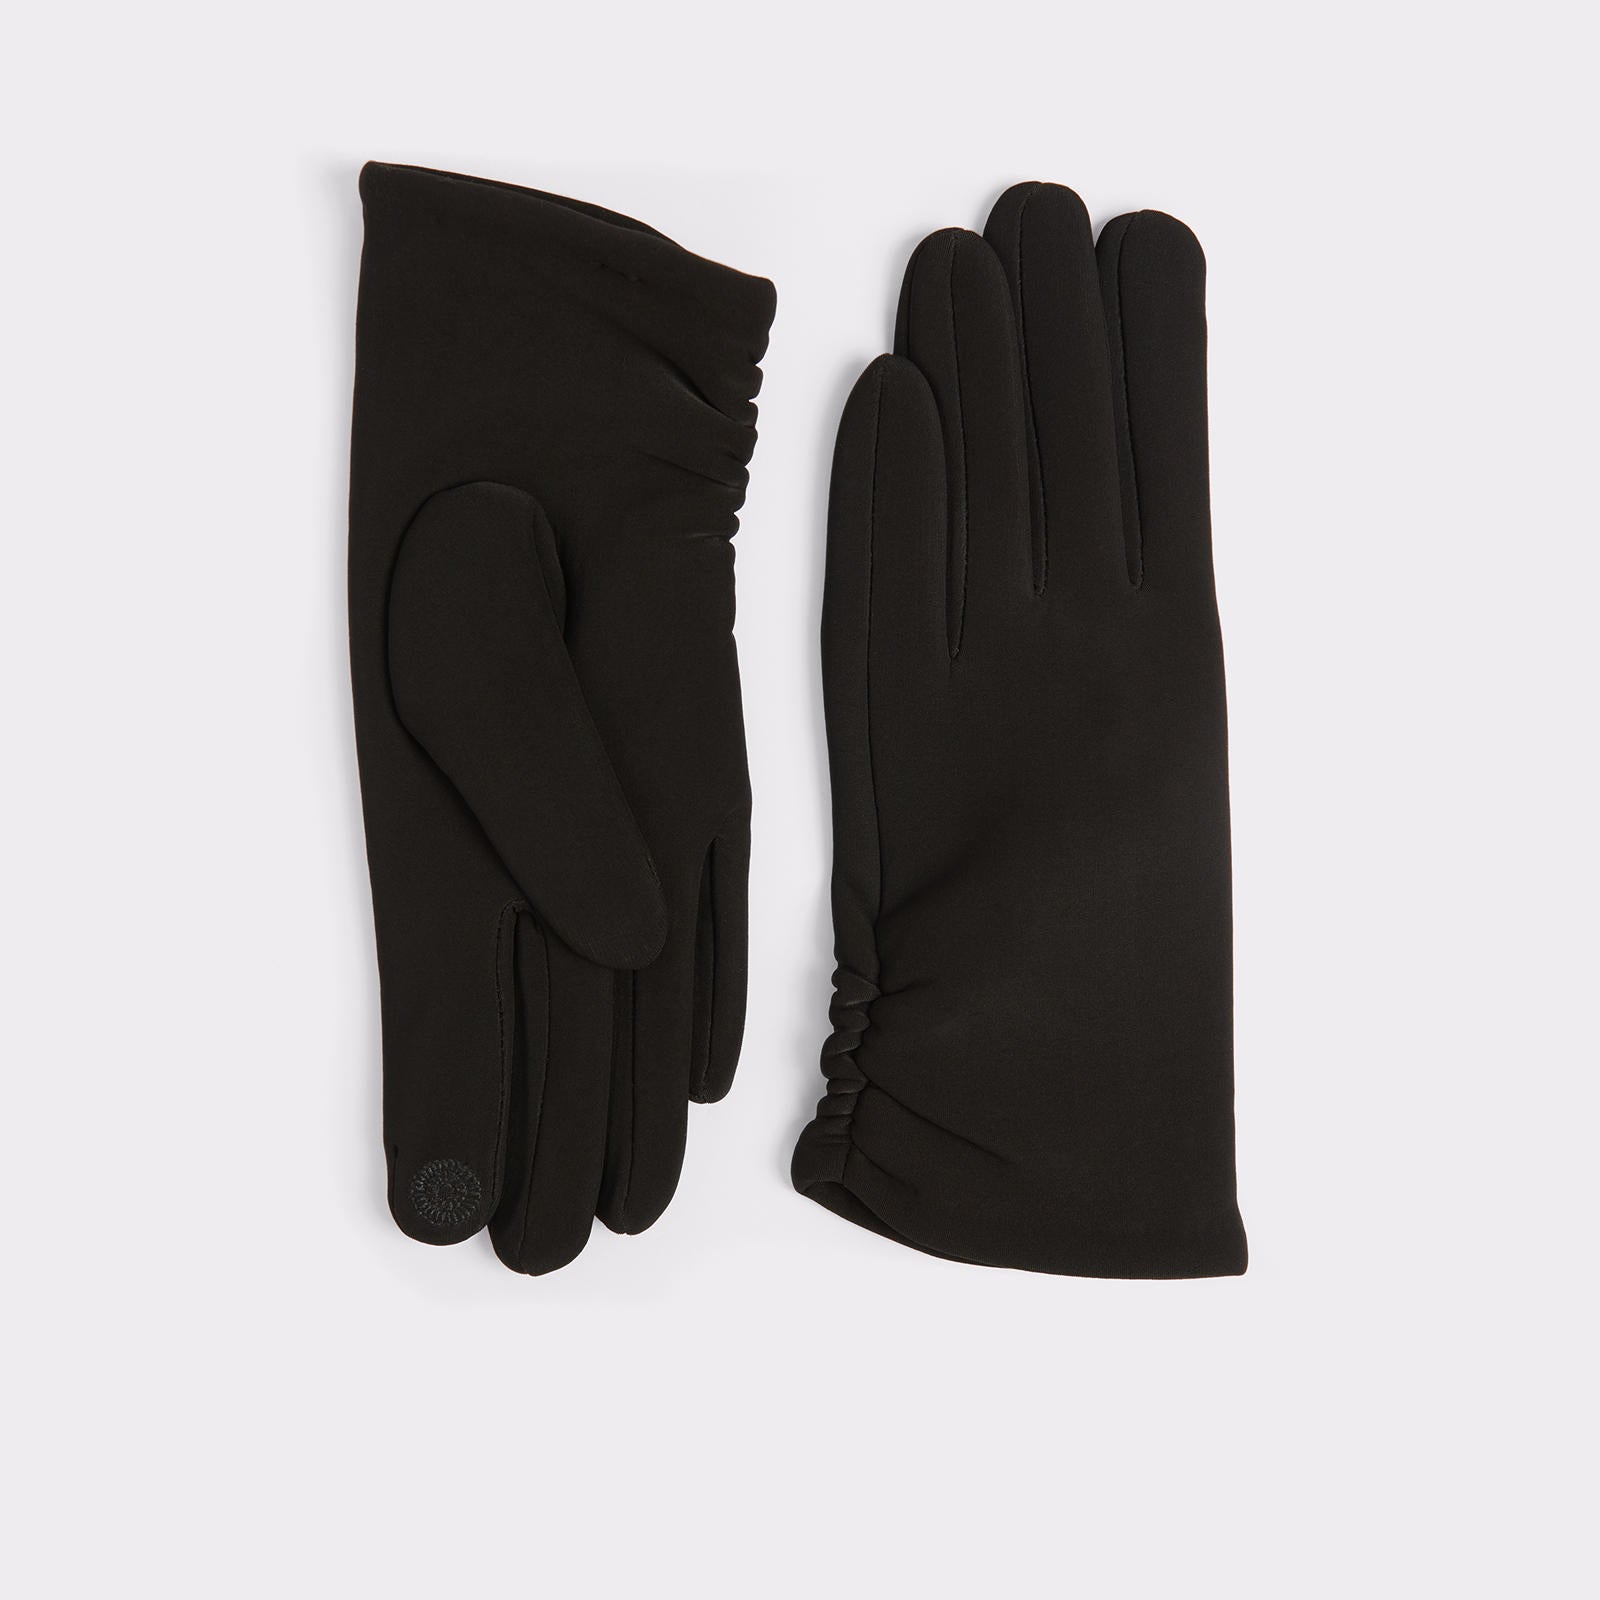 Aldo Women’s Gloves Grydia (Black)